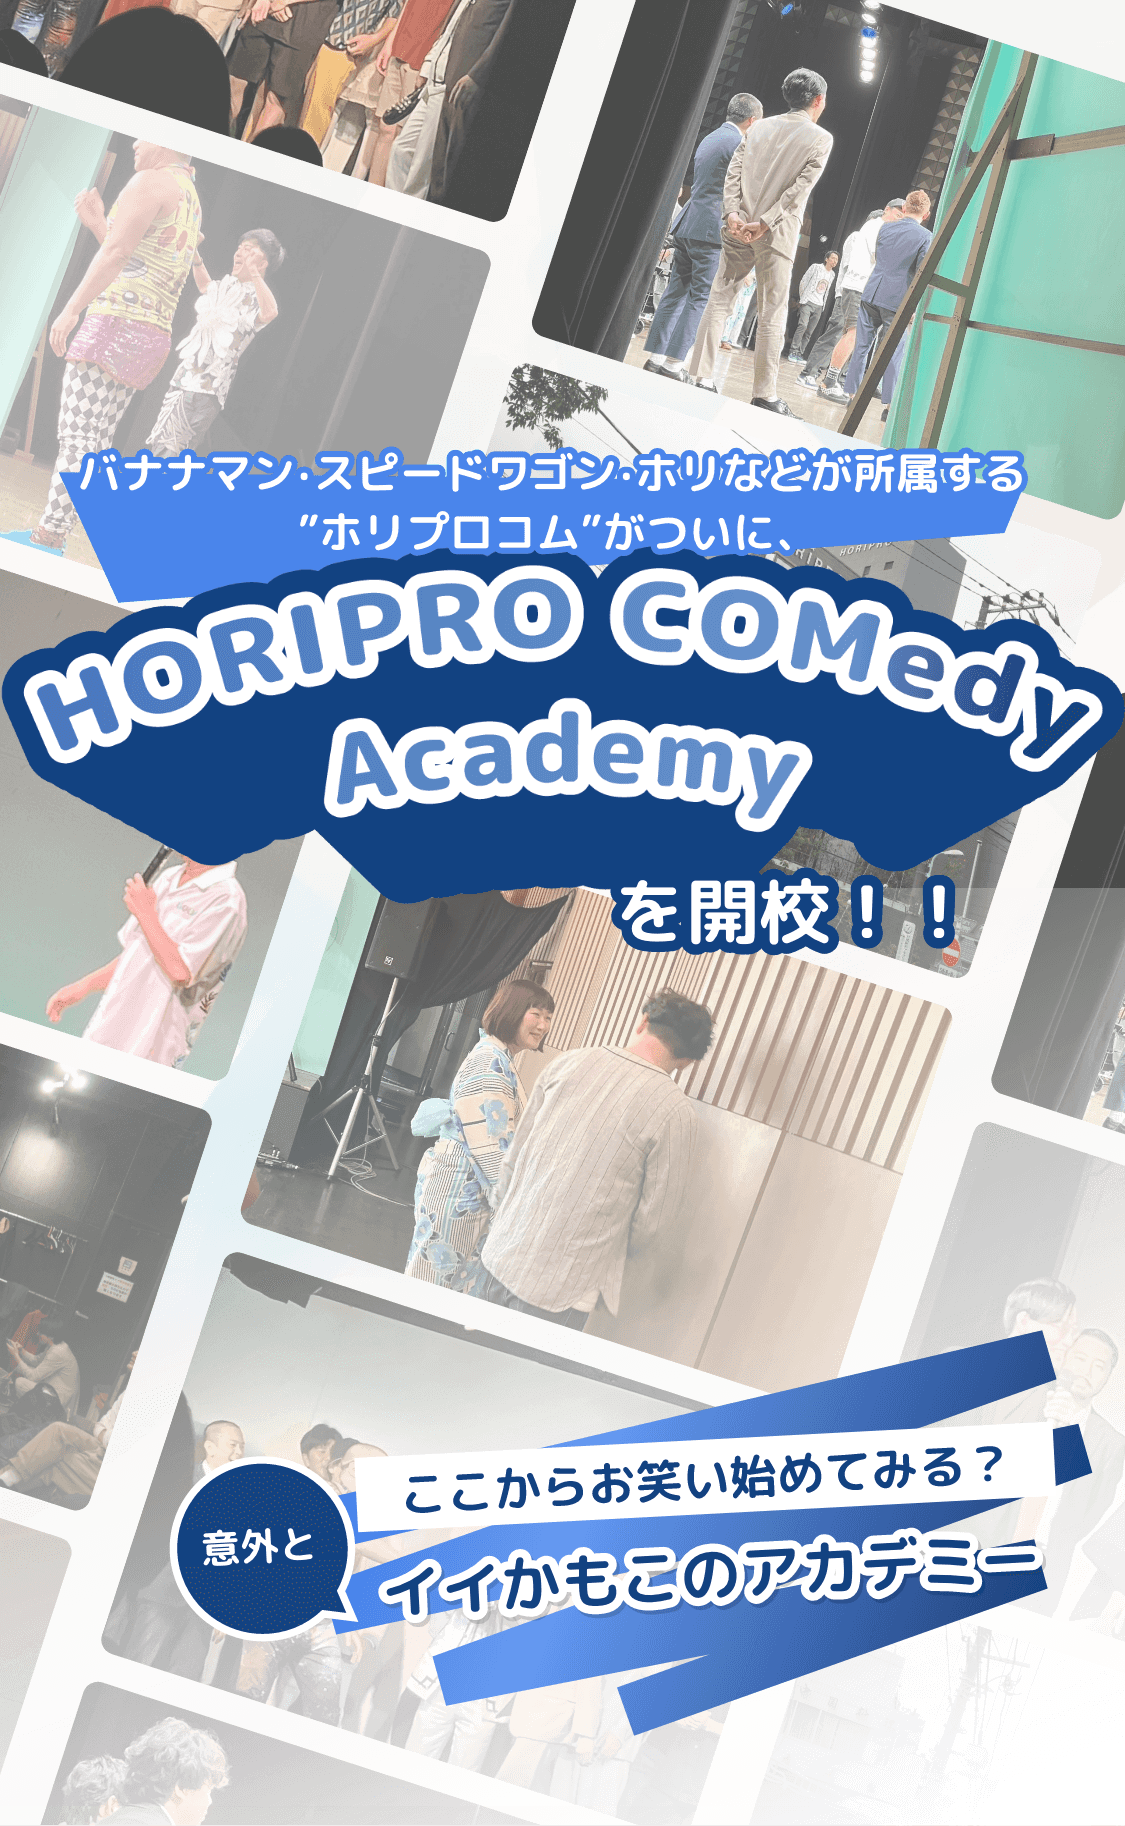 HORIPRO COMedy Academyを開講